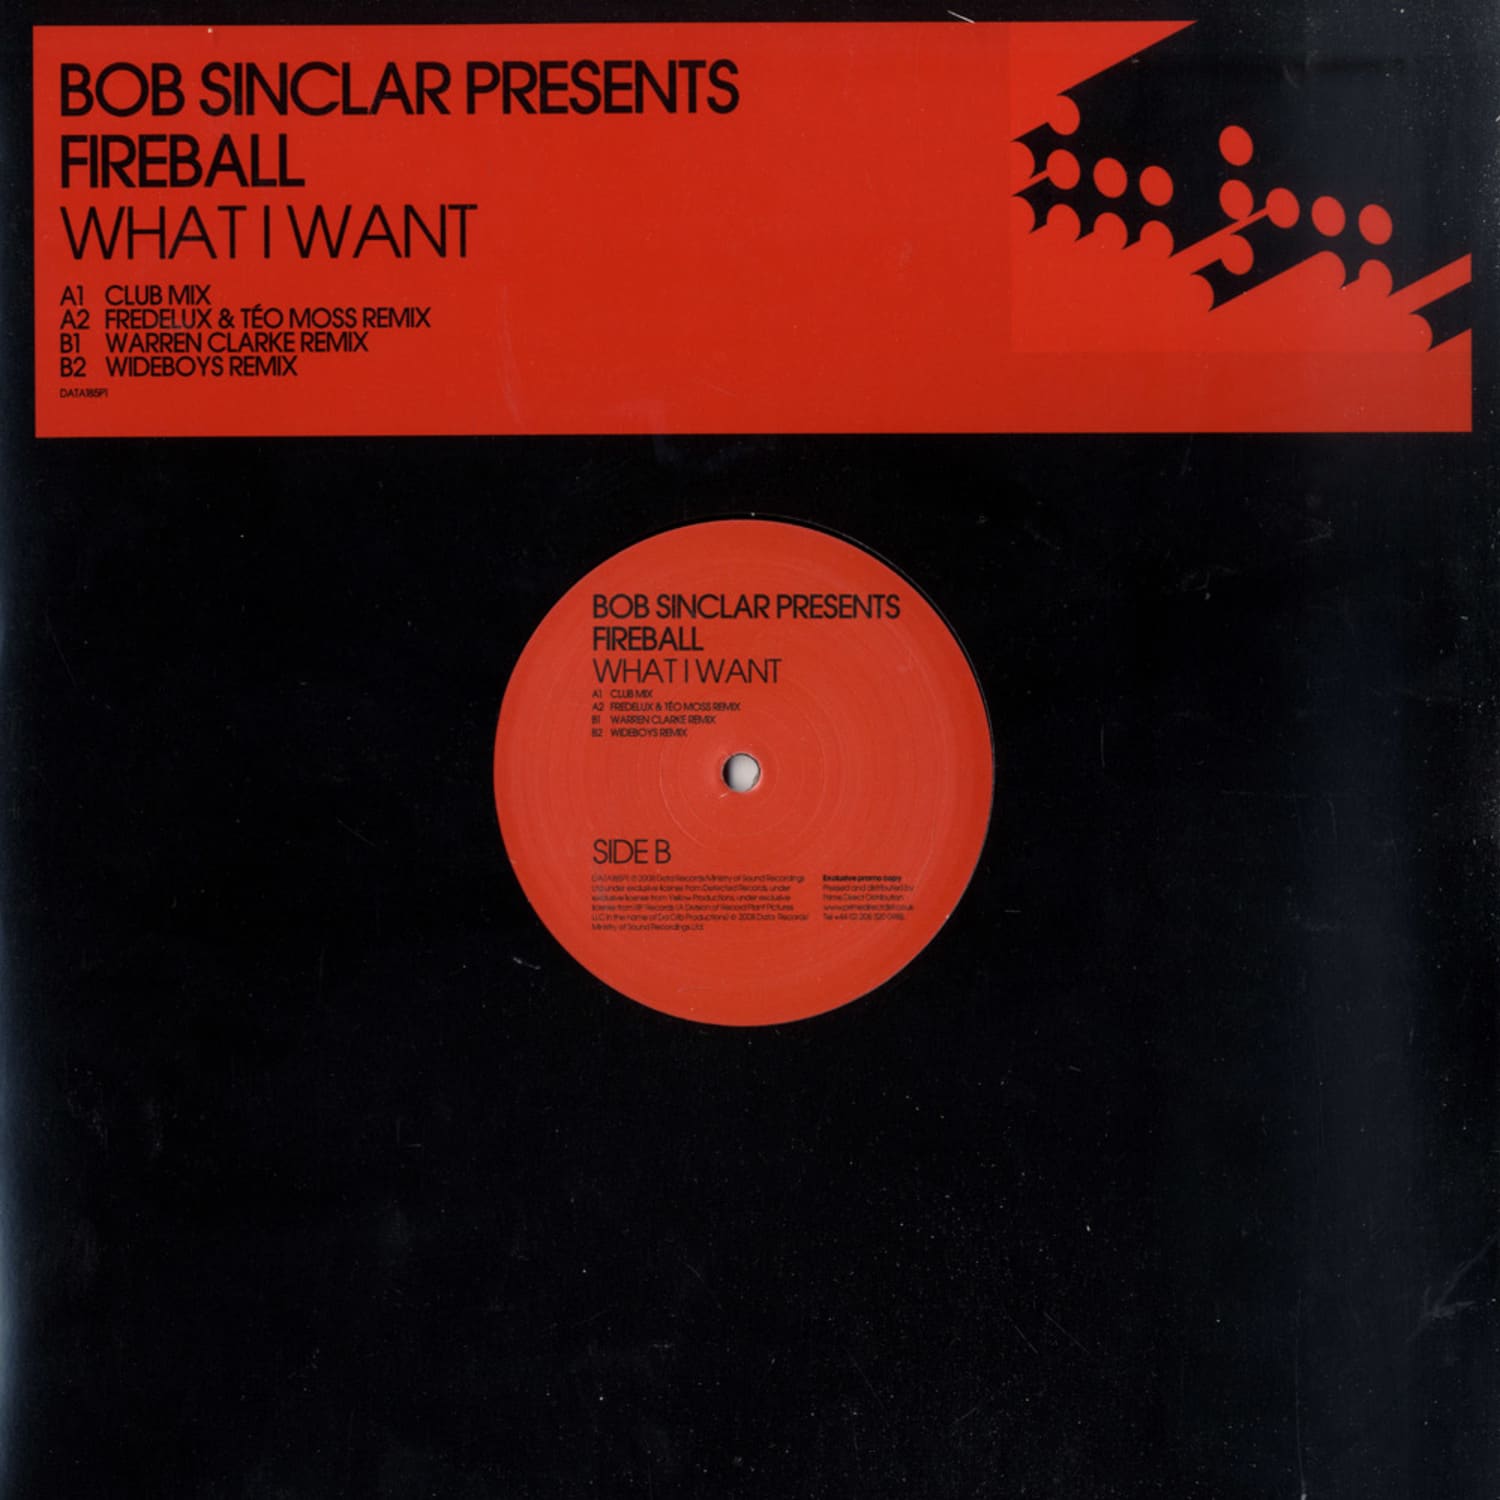 Bob Sinclar Presents Fireball - WHAT I WANT